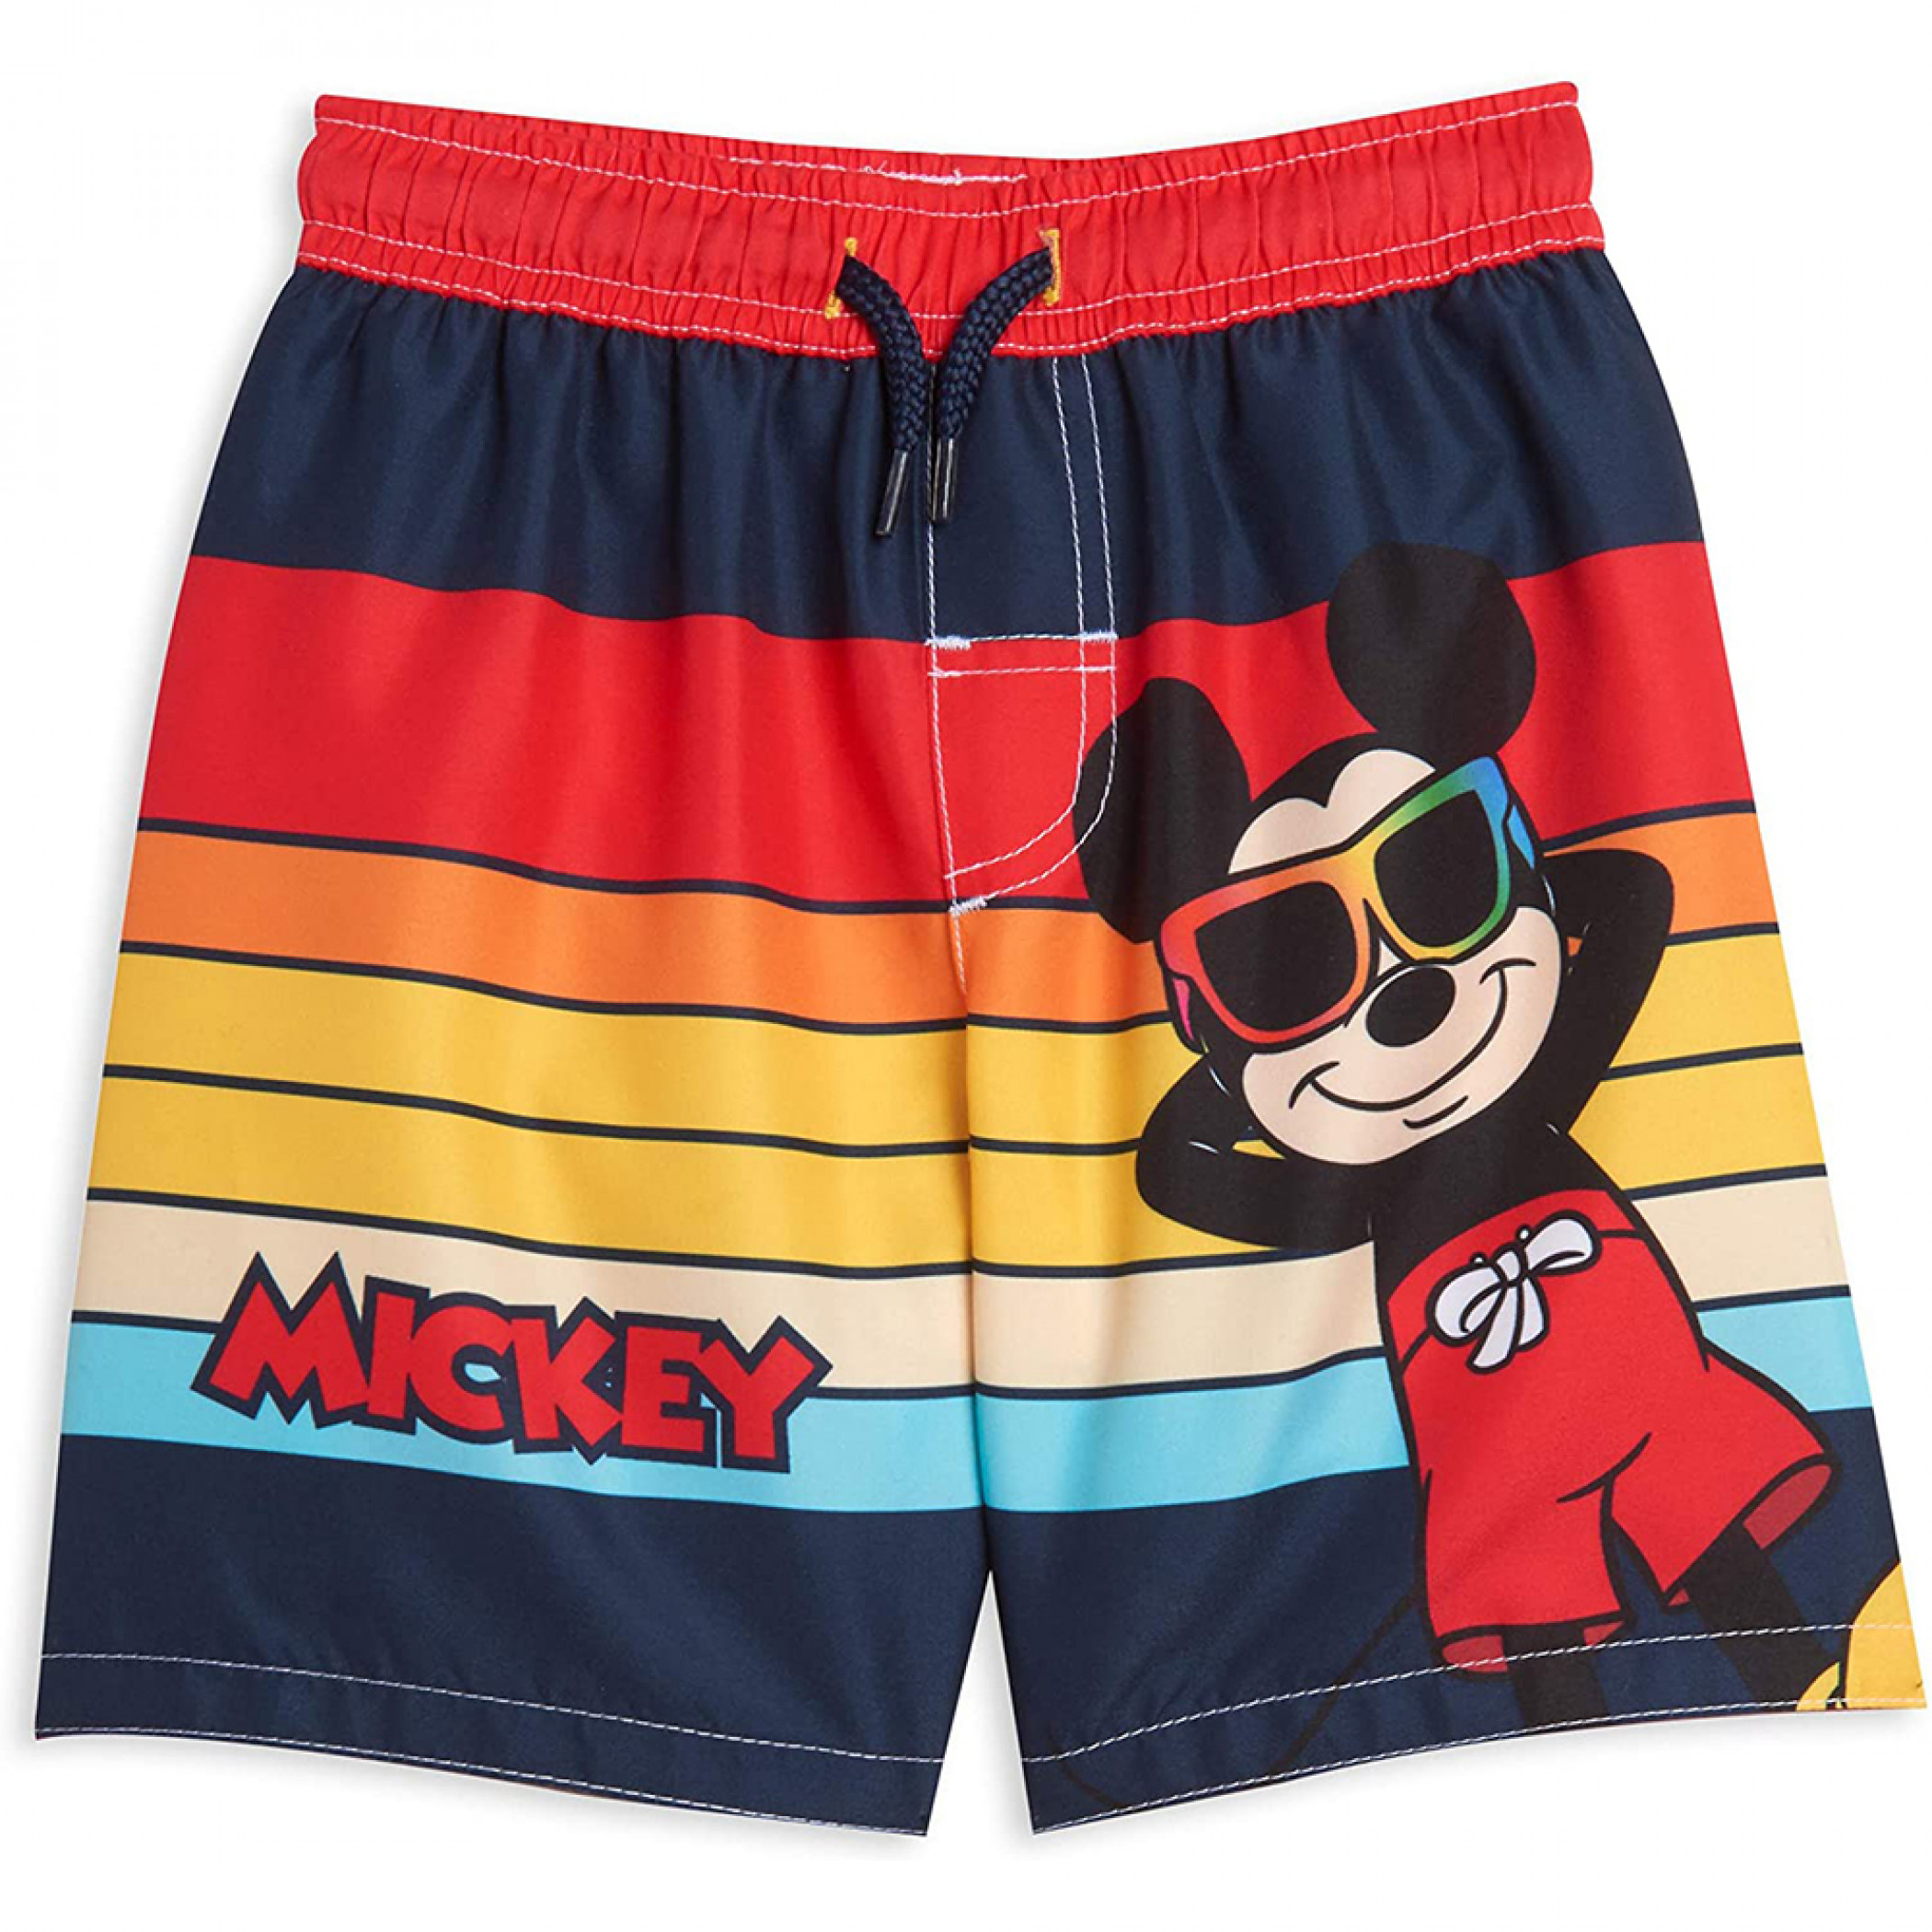 Disney Mickey Mouse Surfing Toddler Swim Trunks and Rashguard Set